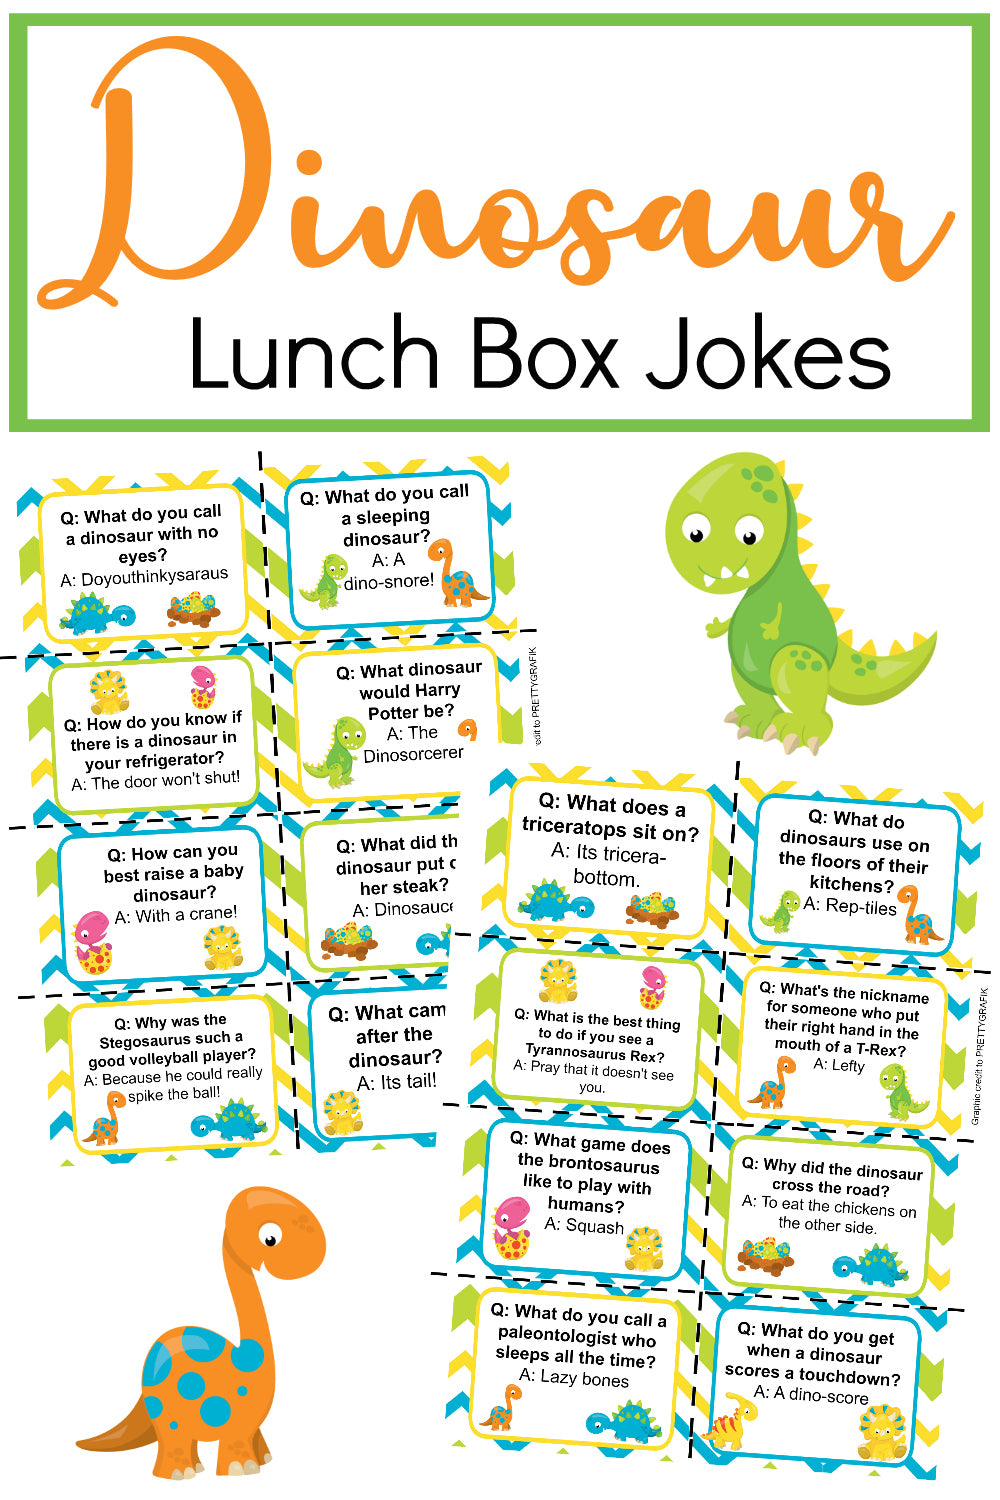 Dinosaur-Themed Lunch Box Jokes!